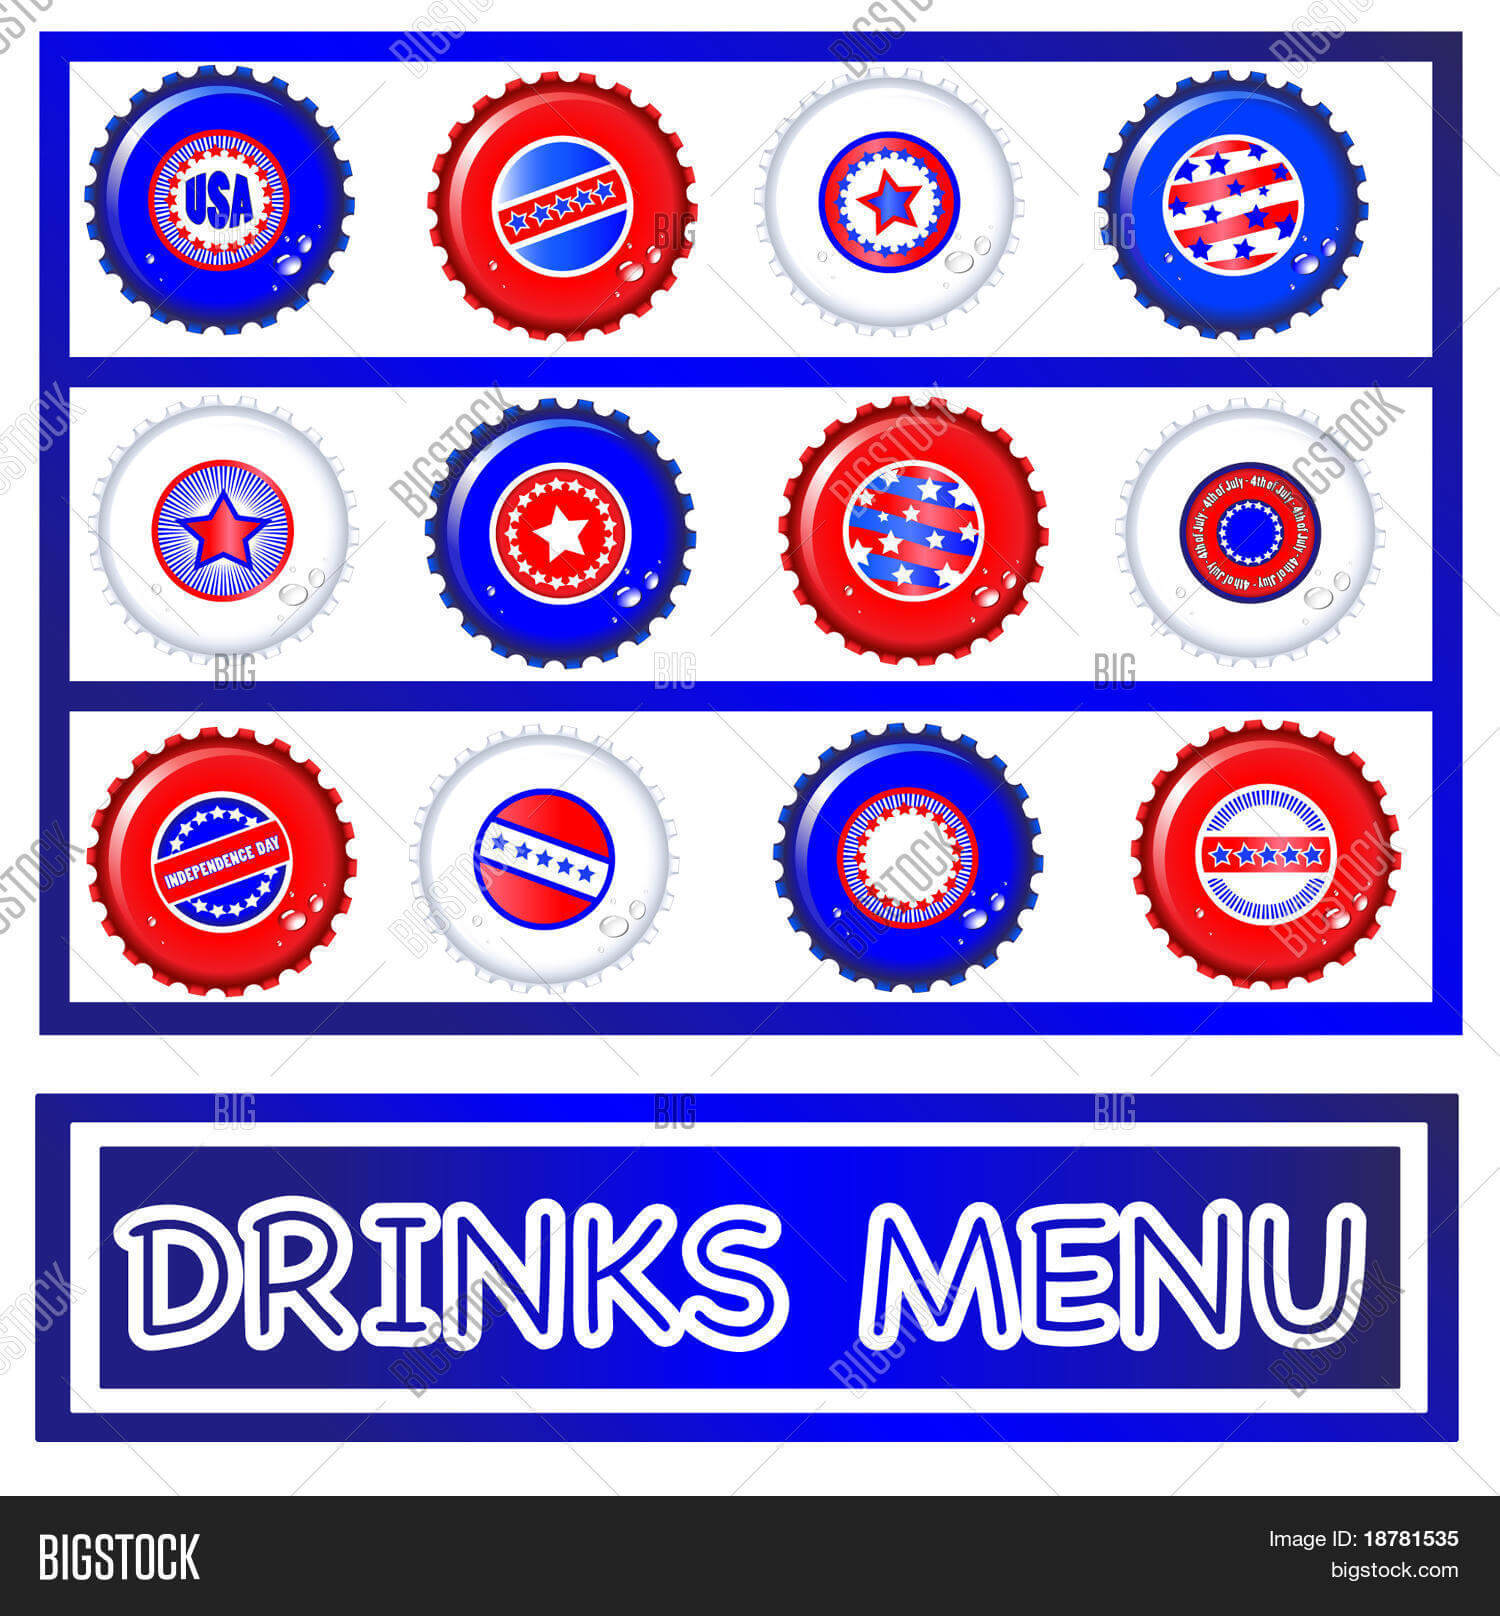 Drinks Menu Template Image & Photo (Free Trial) | Bigstock In 4Th Of July Menu Template